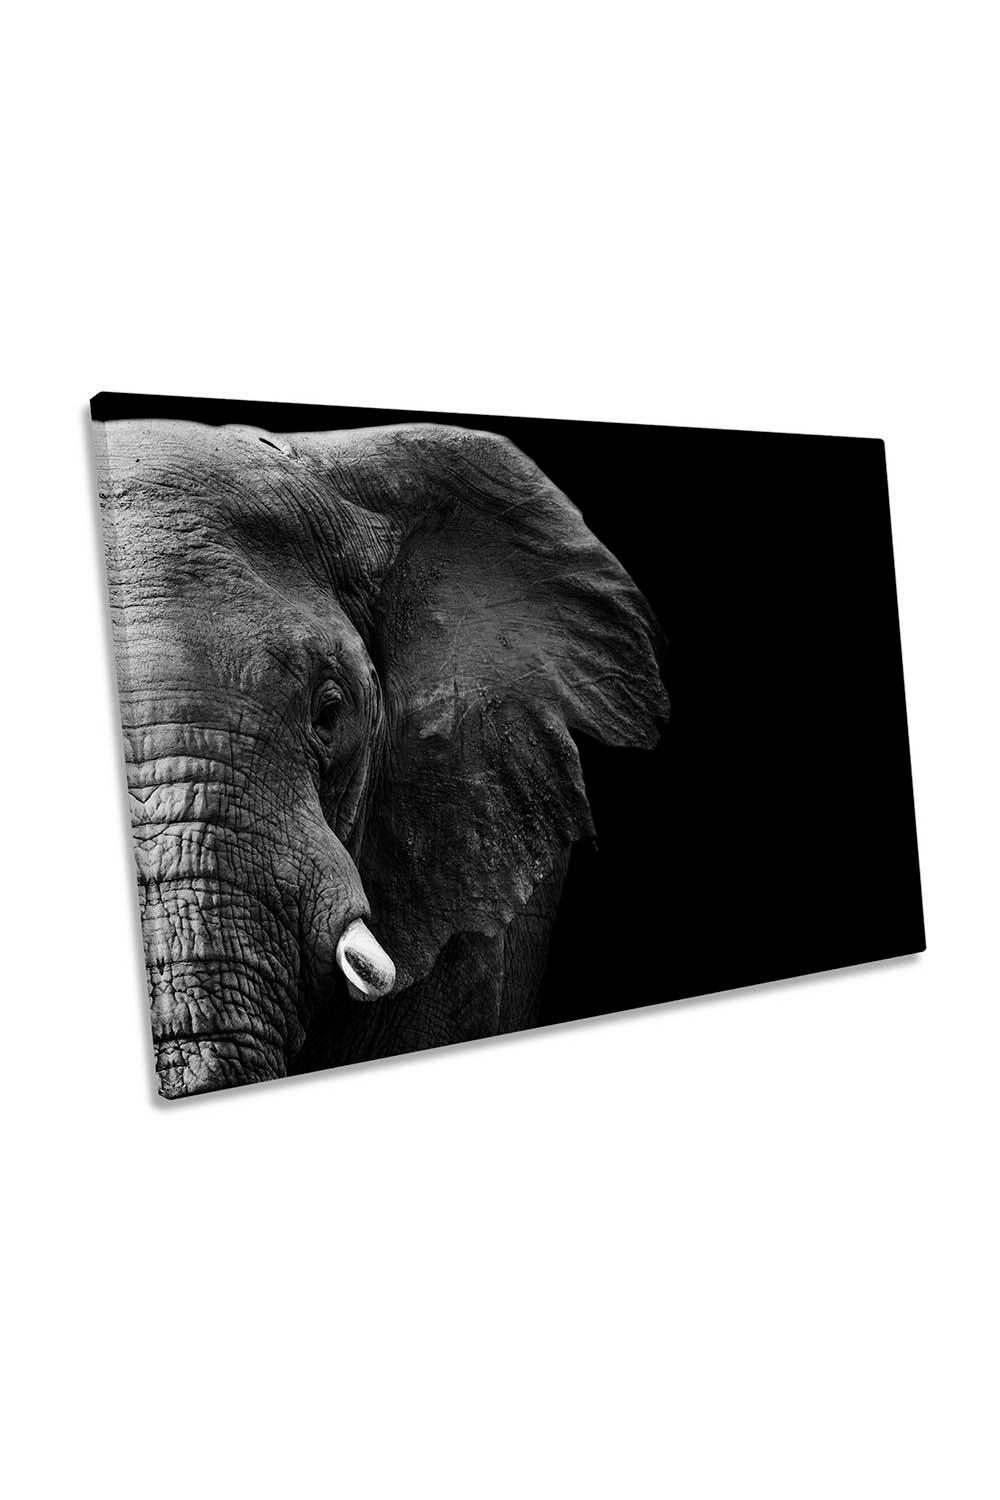 Elephant Low Key Black Canvas Wall Art Picture Print